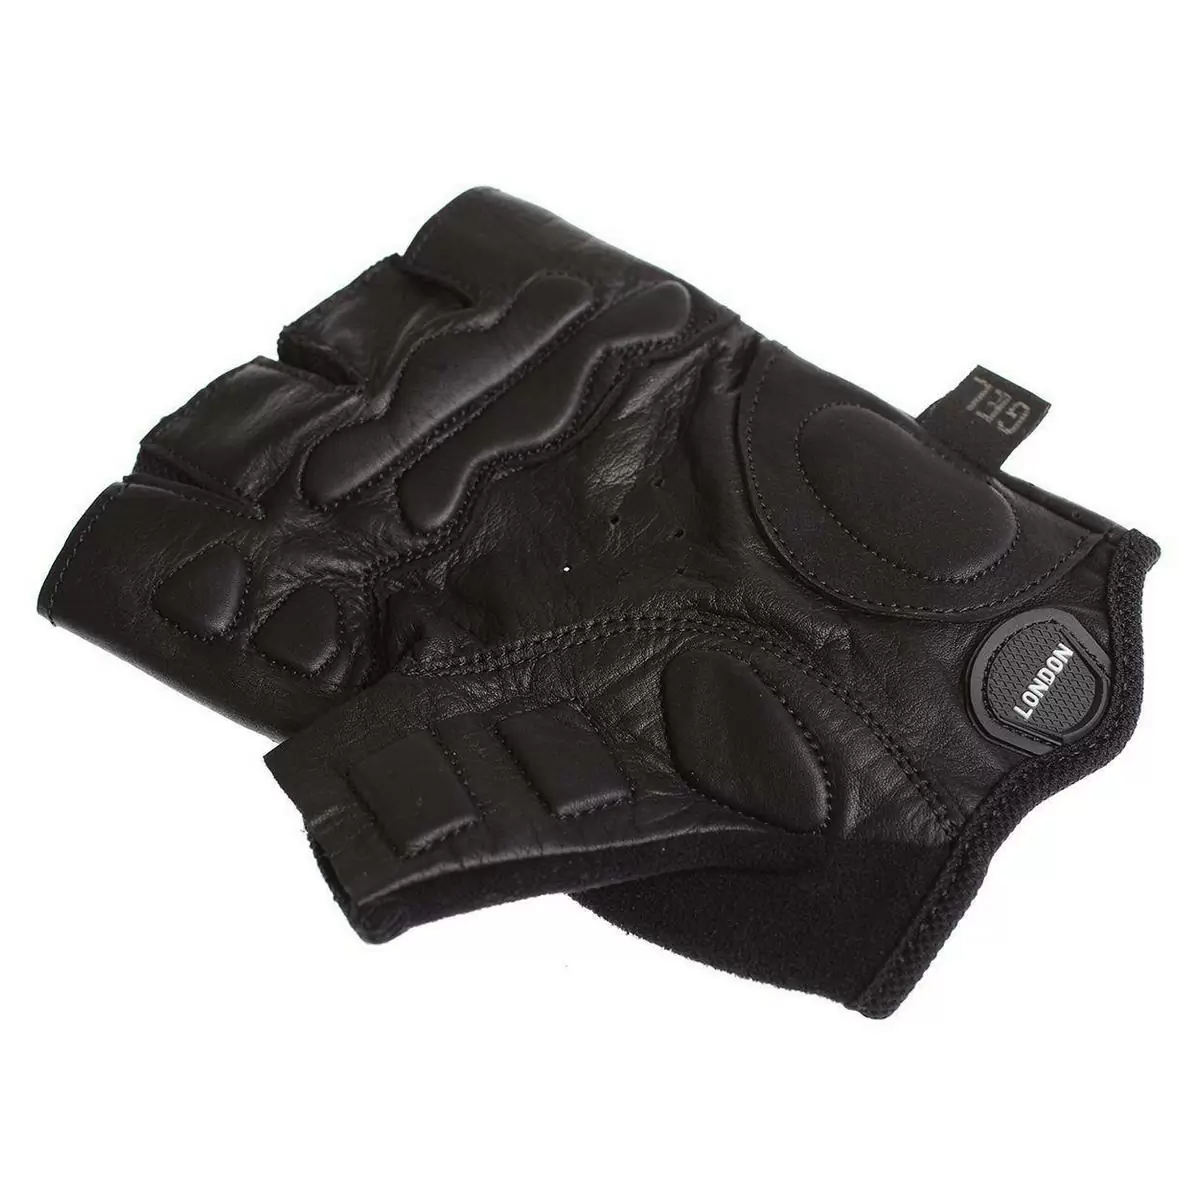 leather gloves classic sport size xxl black #3